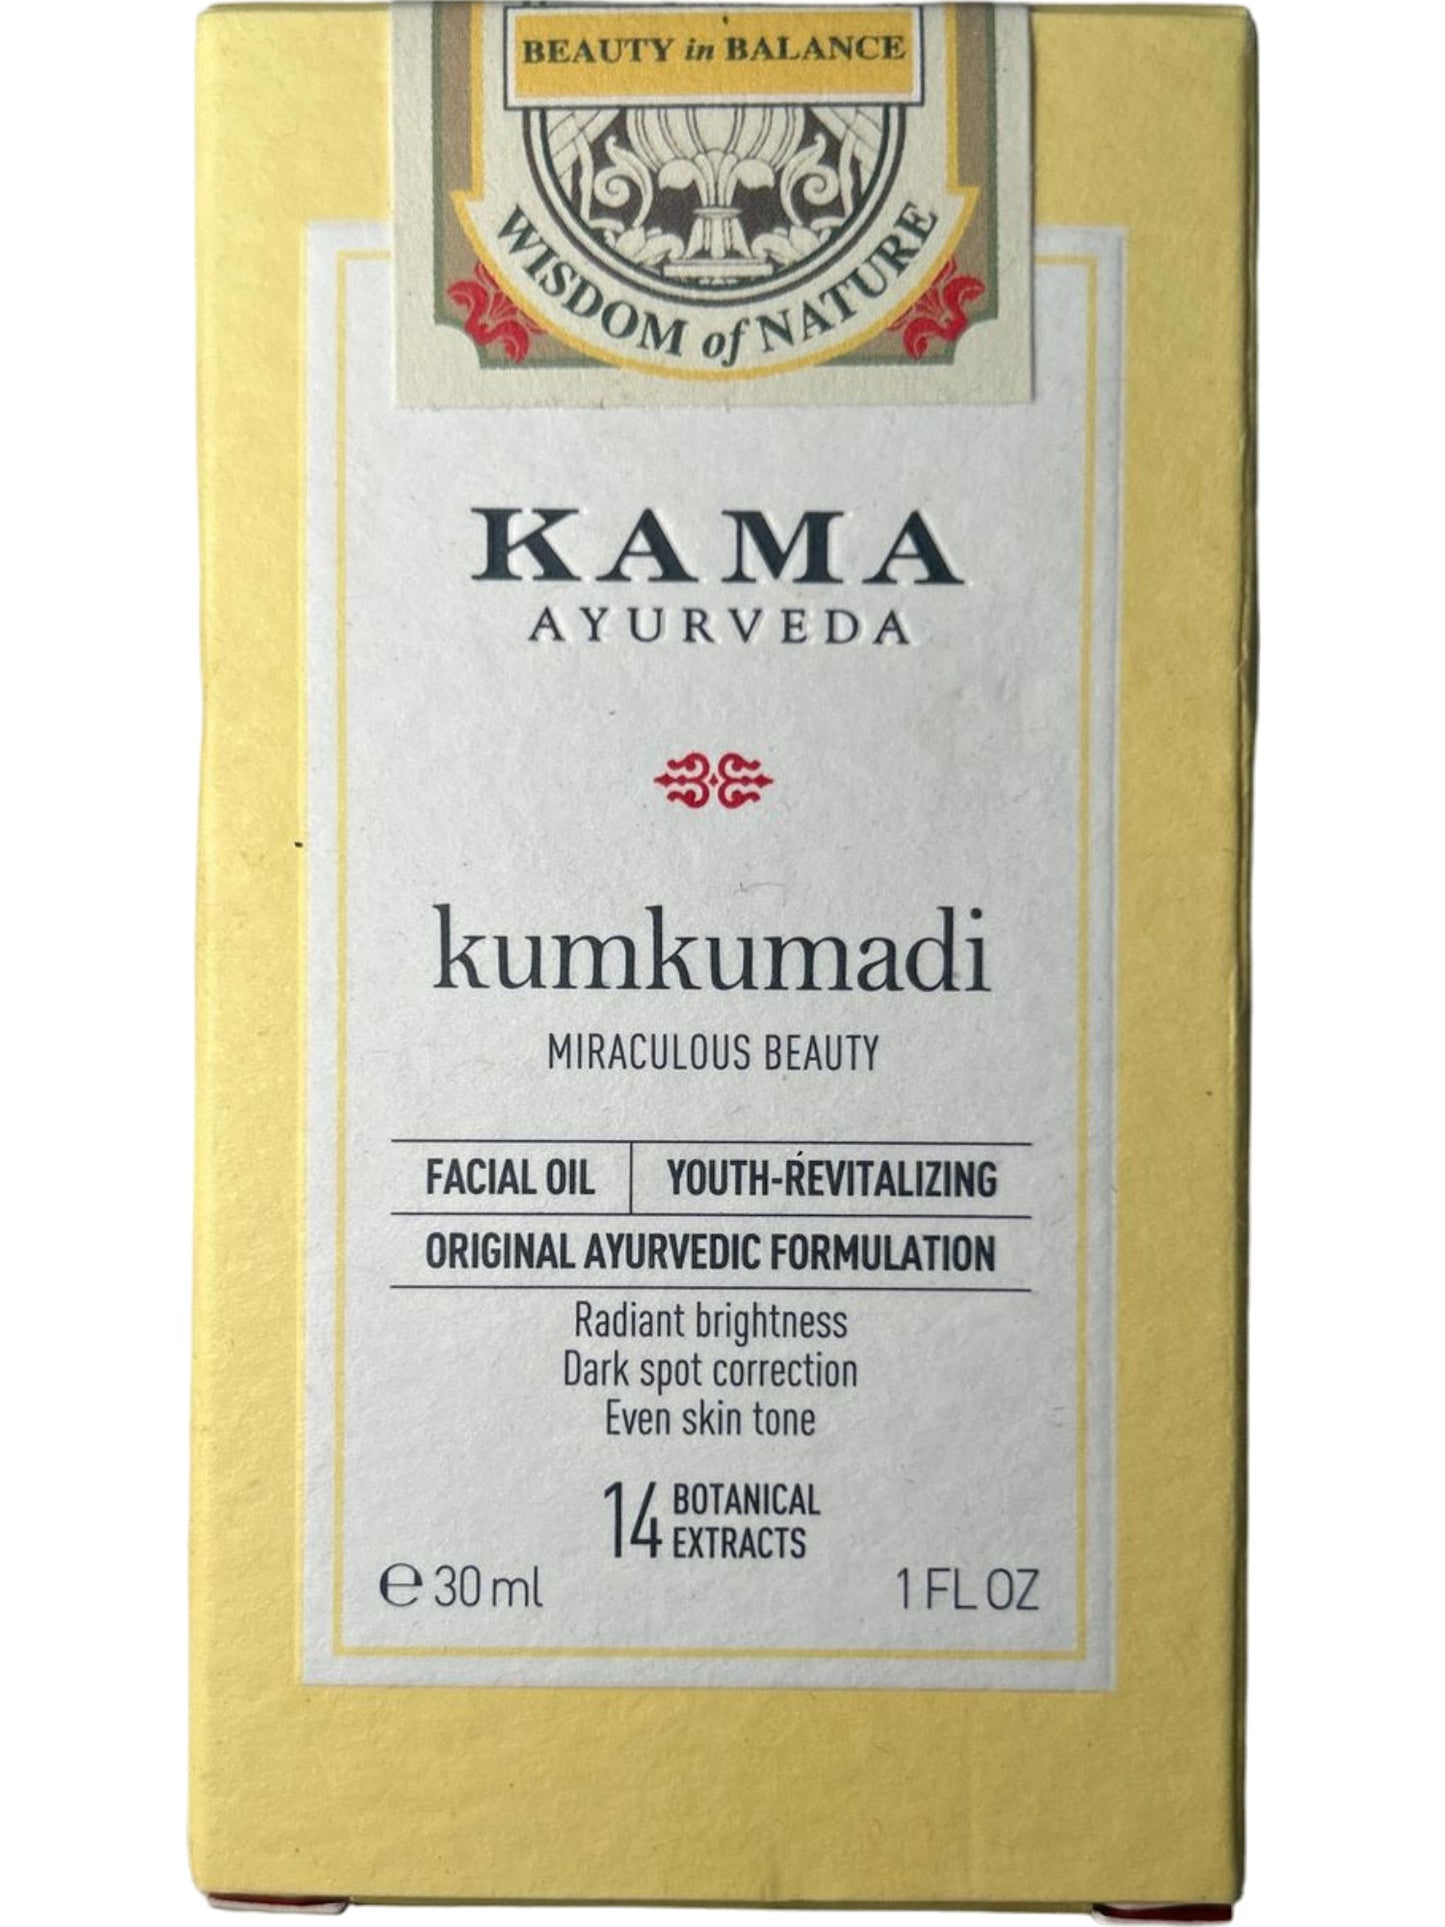 Kama Ayurveda Kumkumadi Miraculous Beauty Facial Oil 30ml